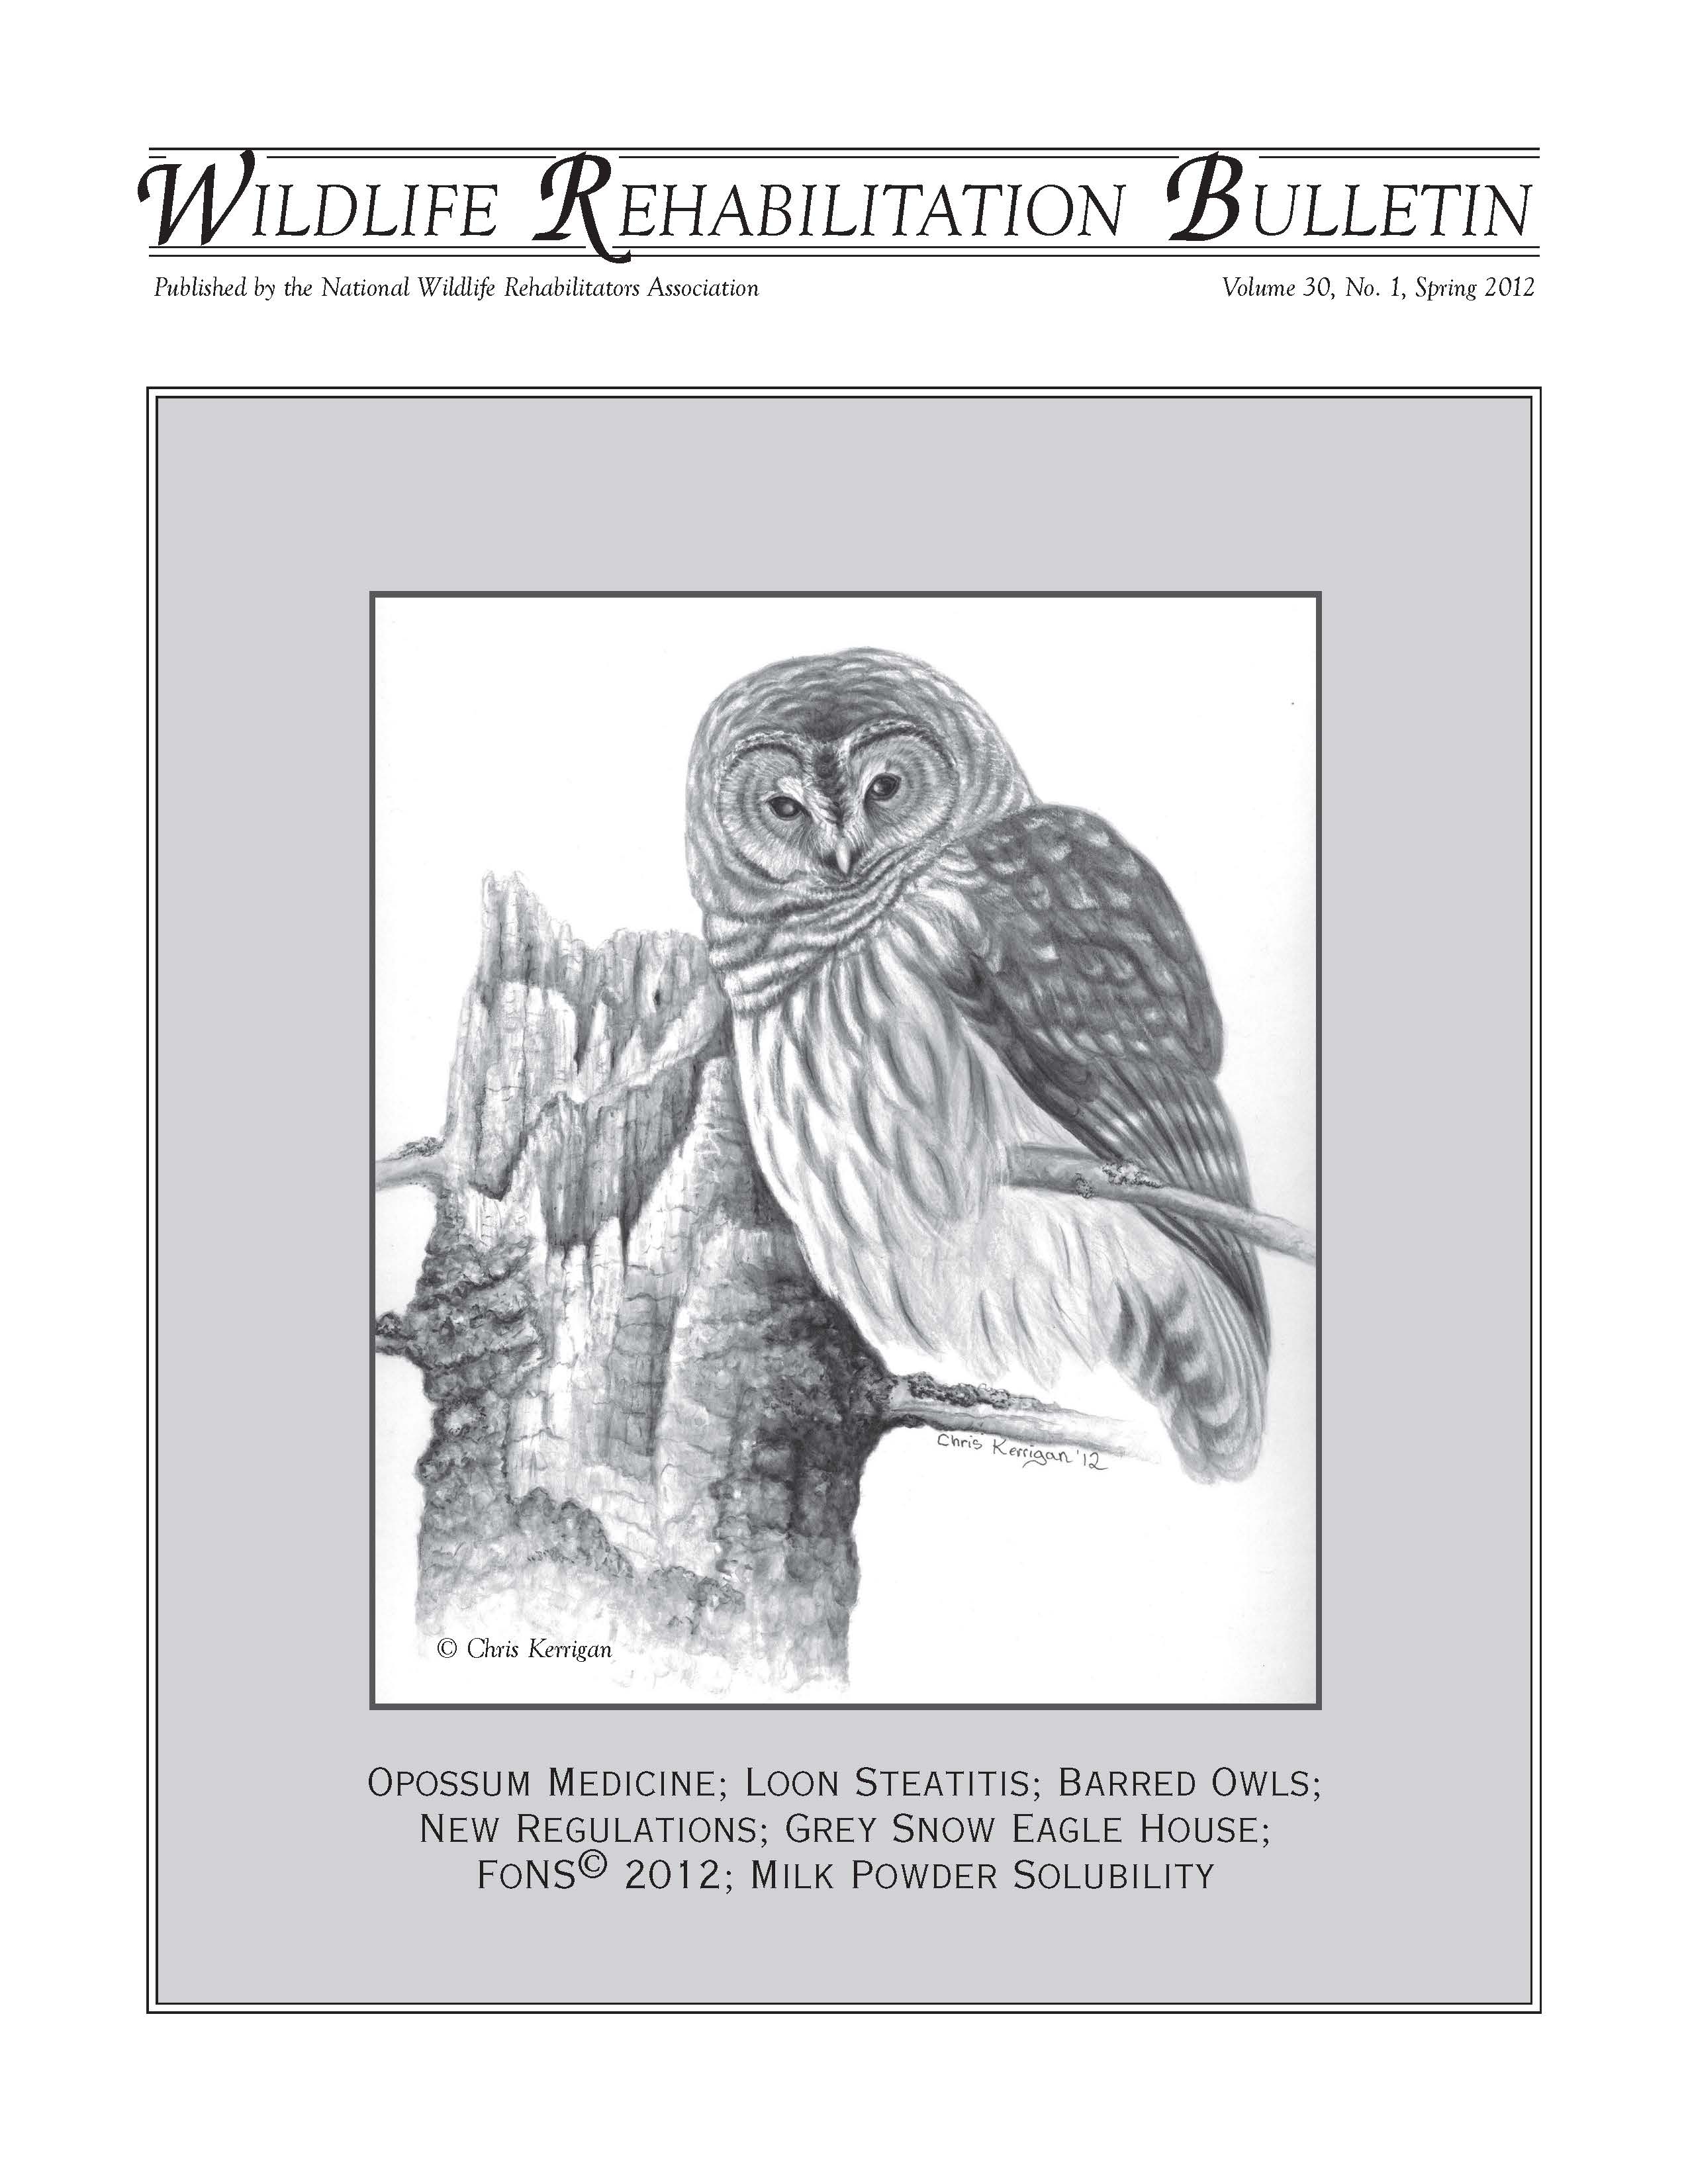 Barred Owl (Strix varia).  Artwork by Chris Kerrigan.